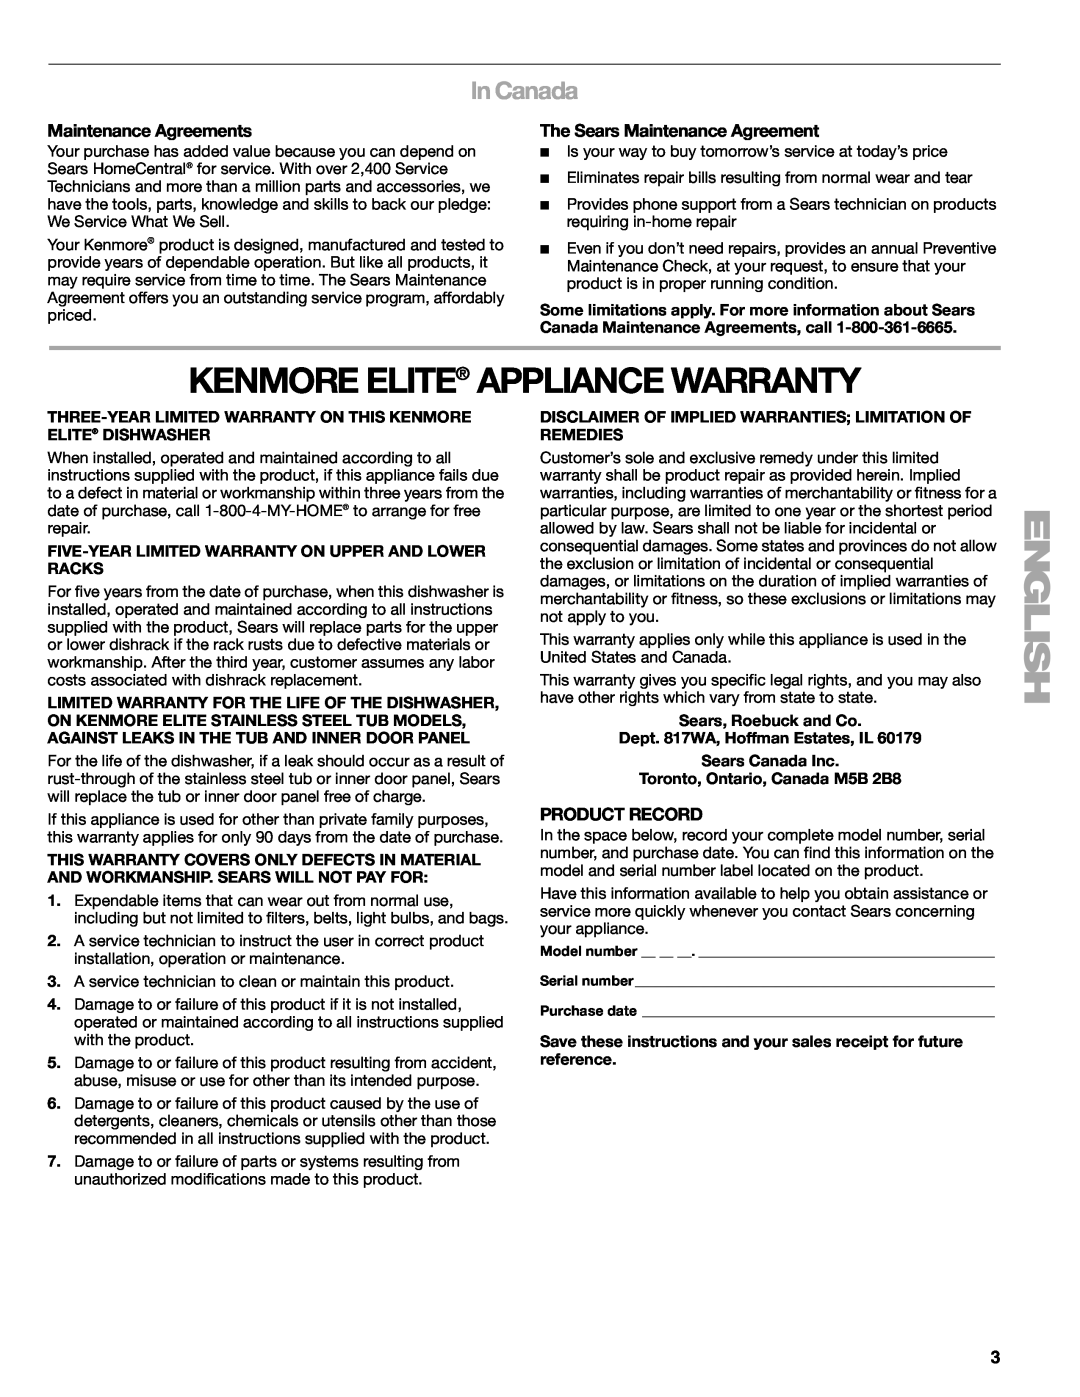 Kenmore 665.1388 Kenmore Elite Appliance Warranty, In Canada, Maintenance Agreements, The Sears Maintenance Agreement 